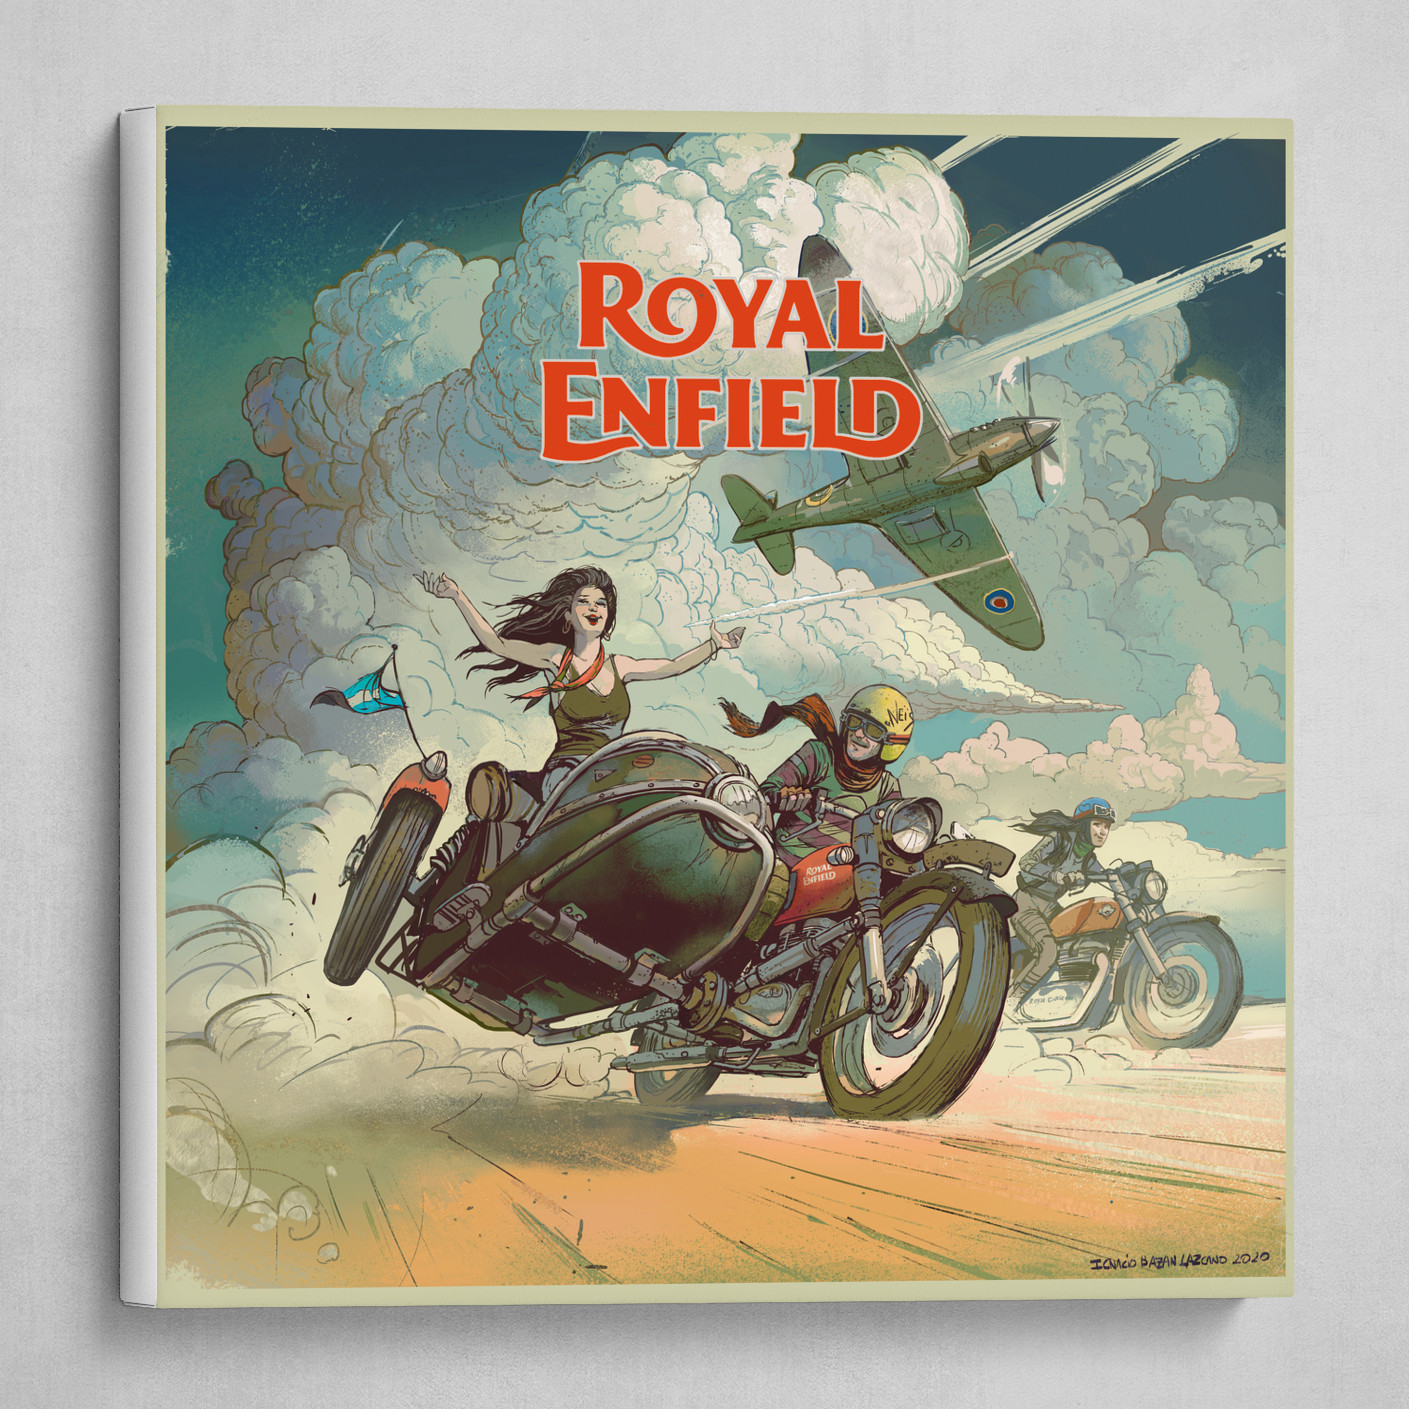 Royal Enfield fanart poster